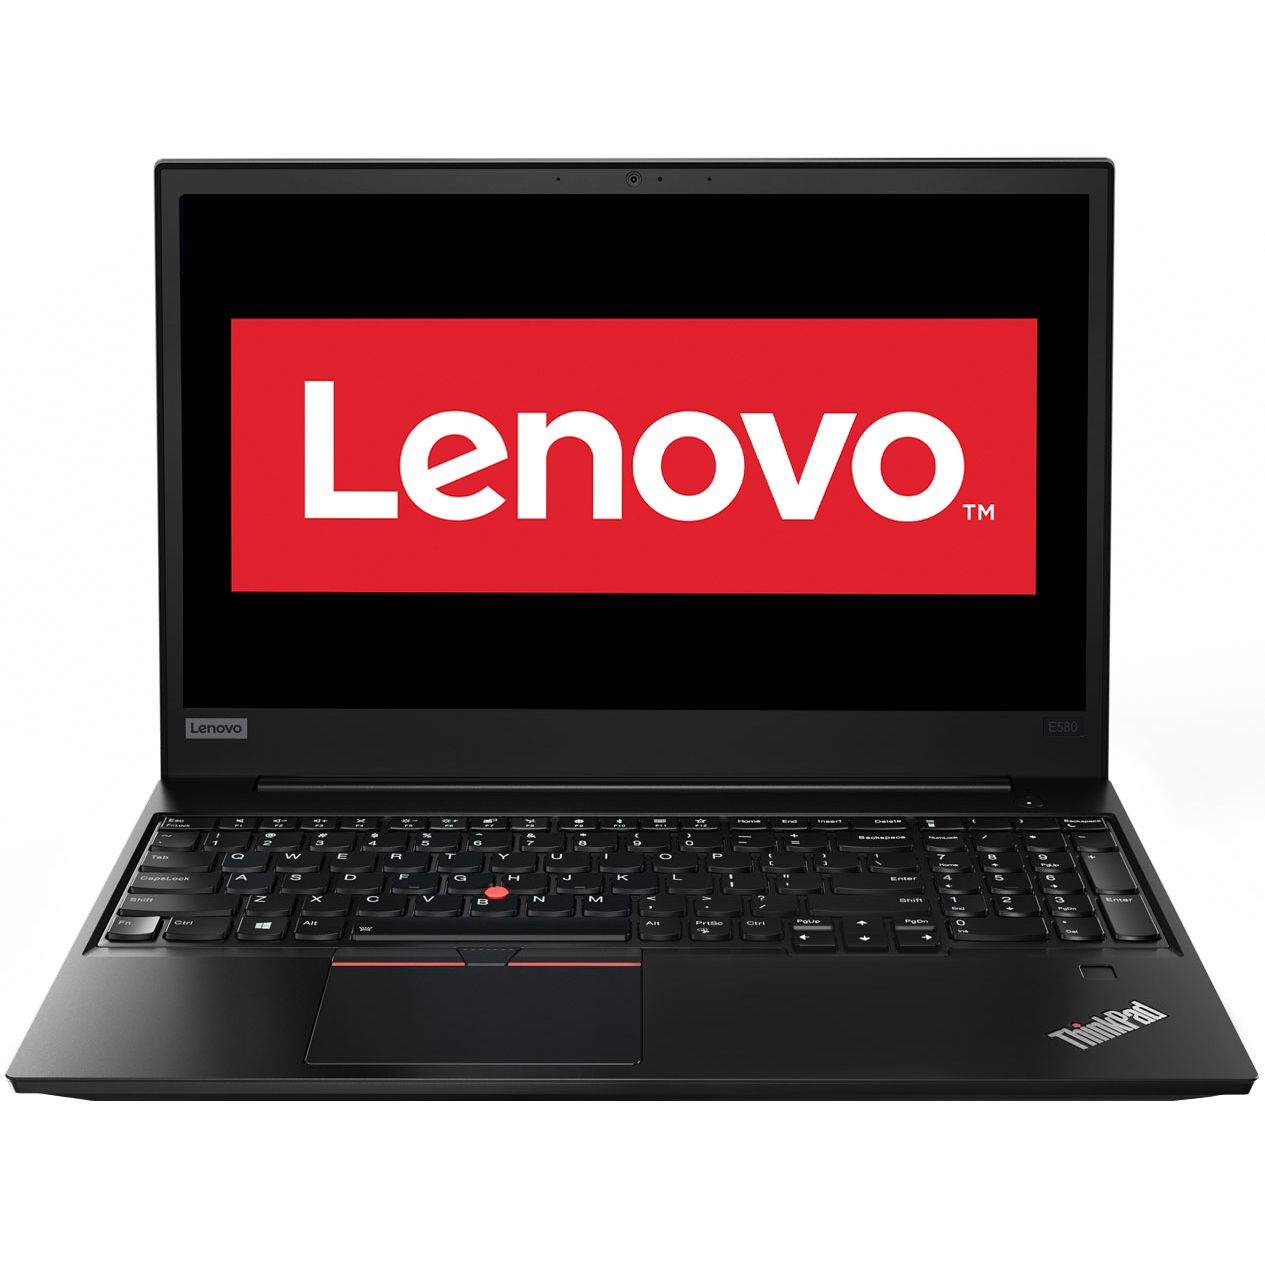 Notebook Lenovo ThinkPad E580 15.6 Full HD Intel Core i3-8130U RAM 4GB HDD 500GB Windows 10 Pro Negru